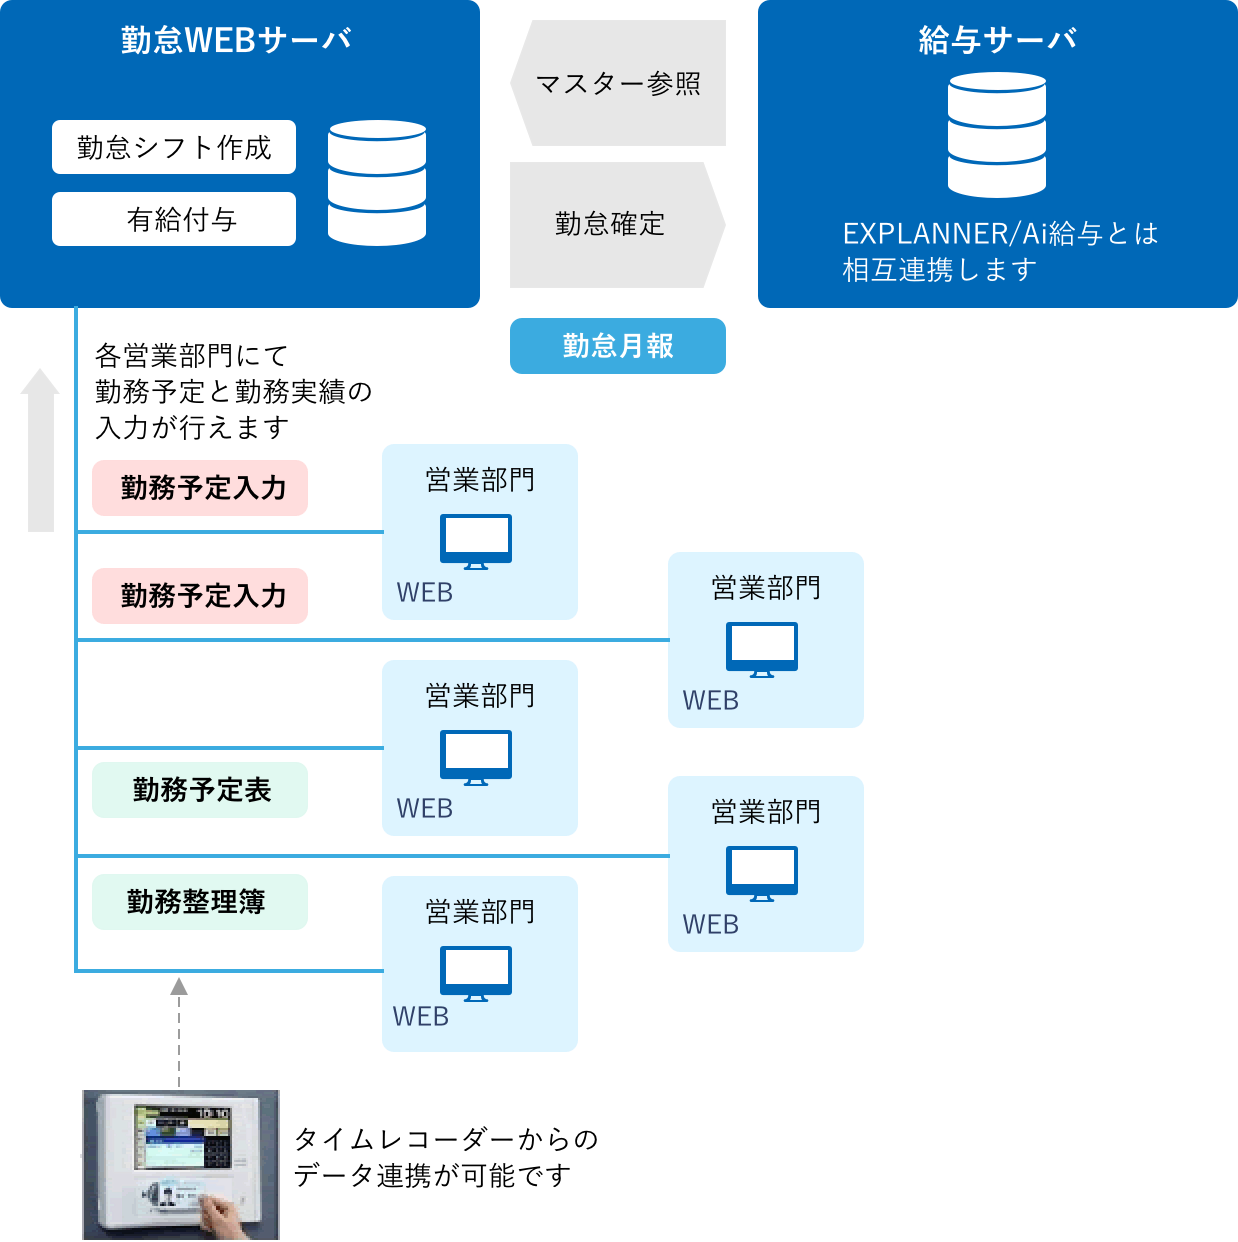 EXPLANNER/Ai人事・給与連携 WEB勤怠管理システム〈Smart Worker〉│データの流れ